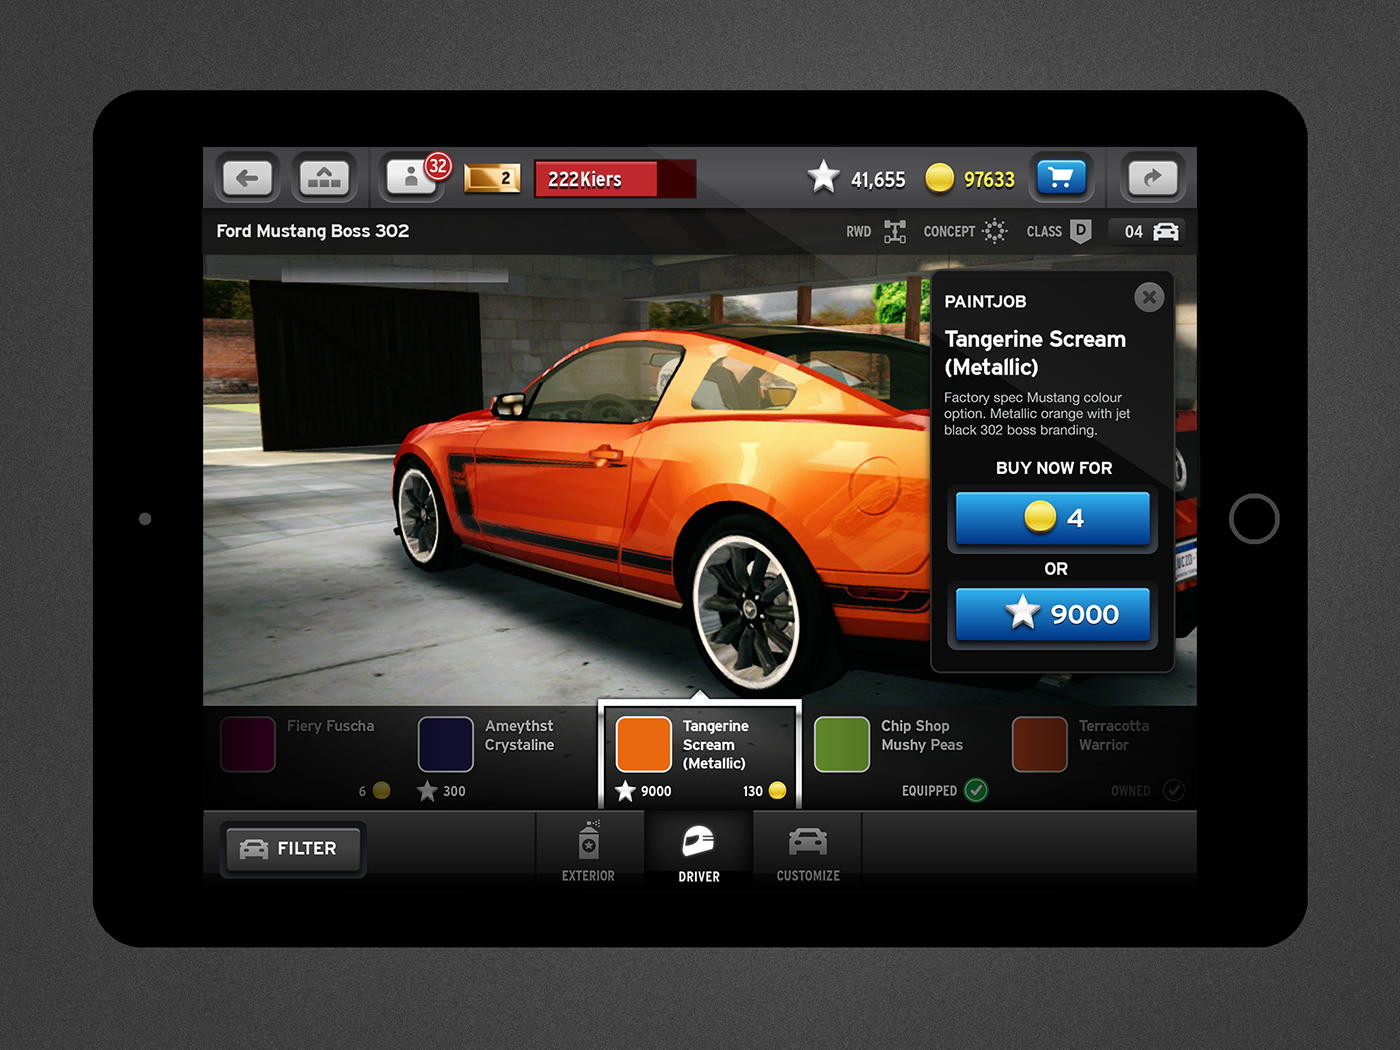 Games UI ios driving games iPad ipone